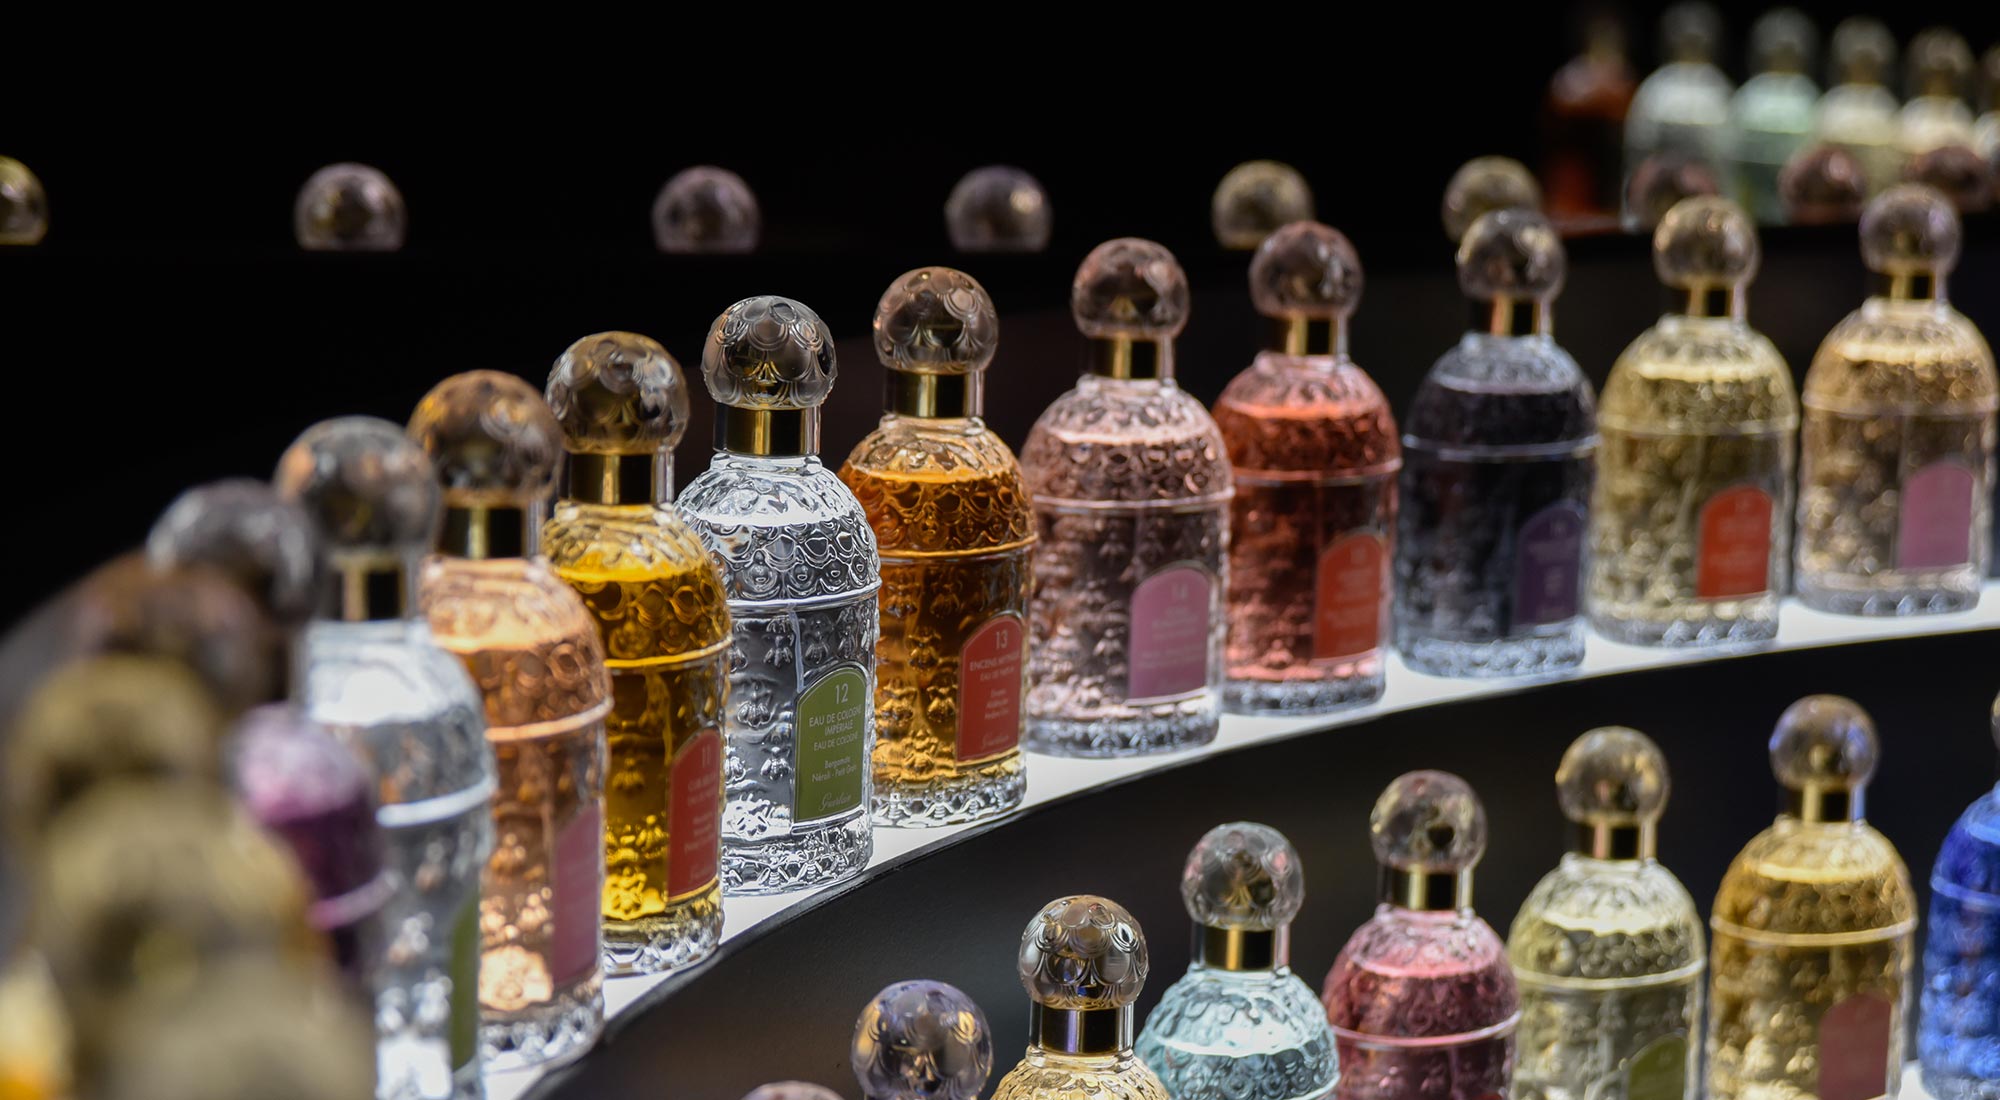 Guerlain, artisan perfumer, makeup - Perfumes & Cosmetics - LVMH